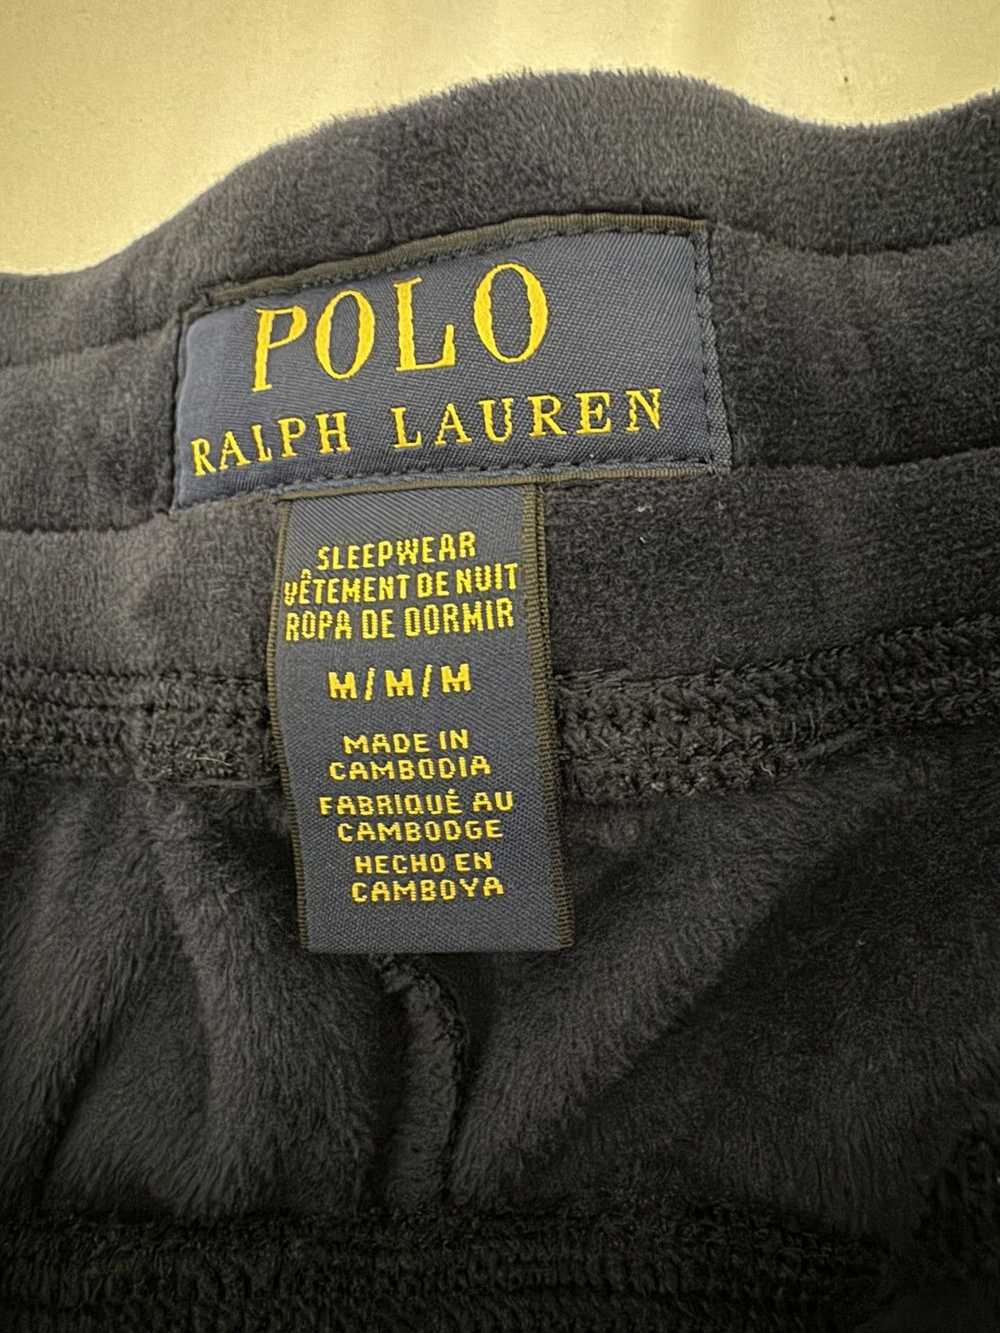 Polo Ralph Lauren Polo pants - image 2